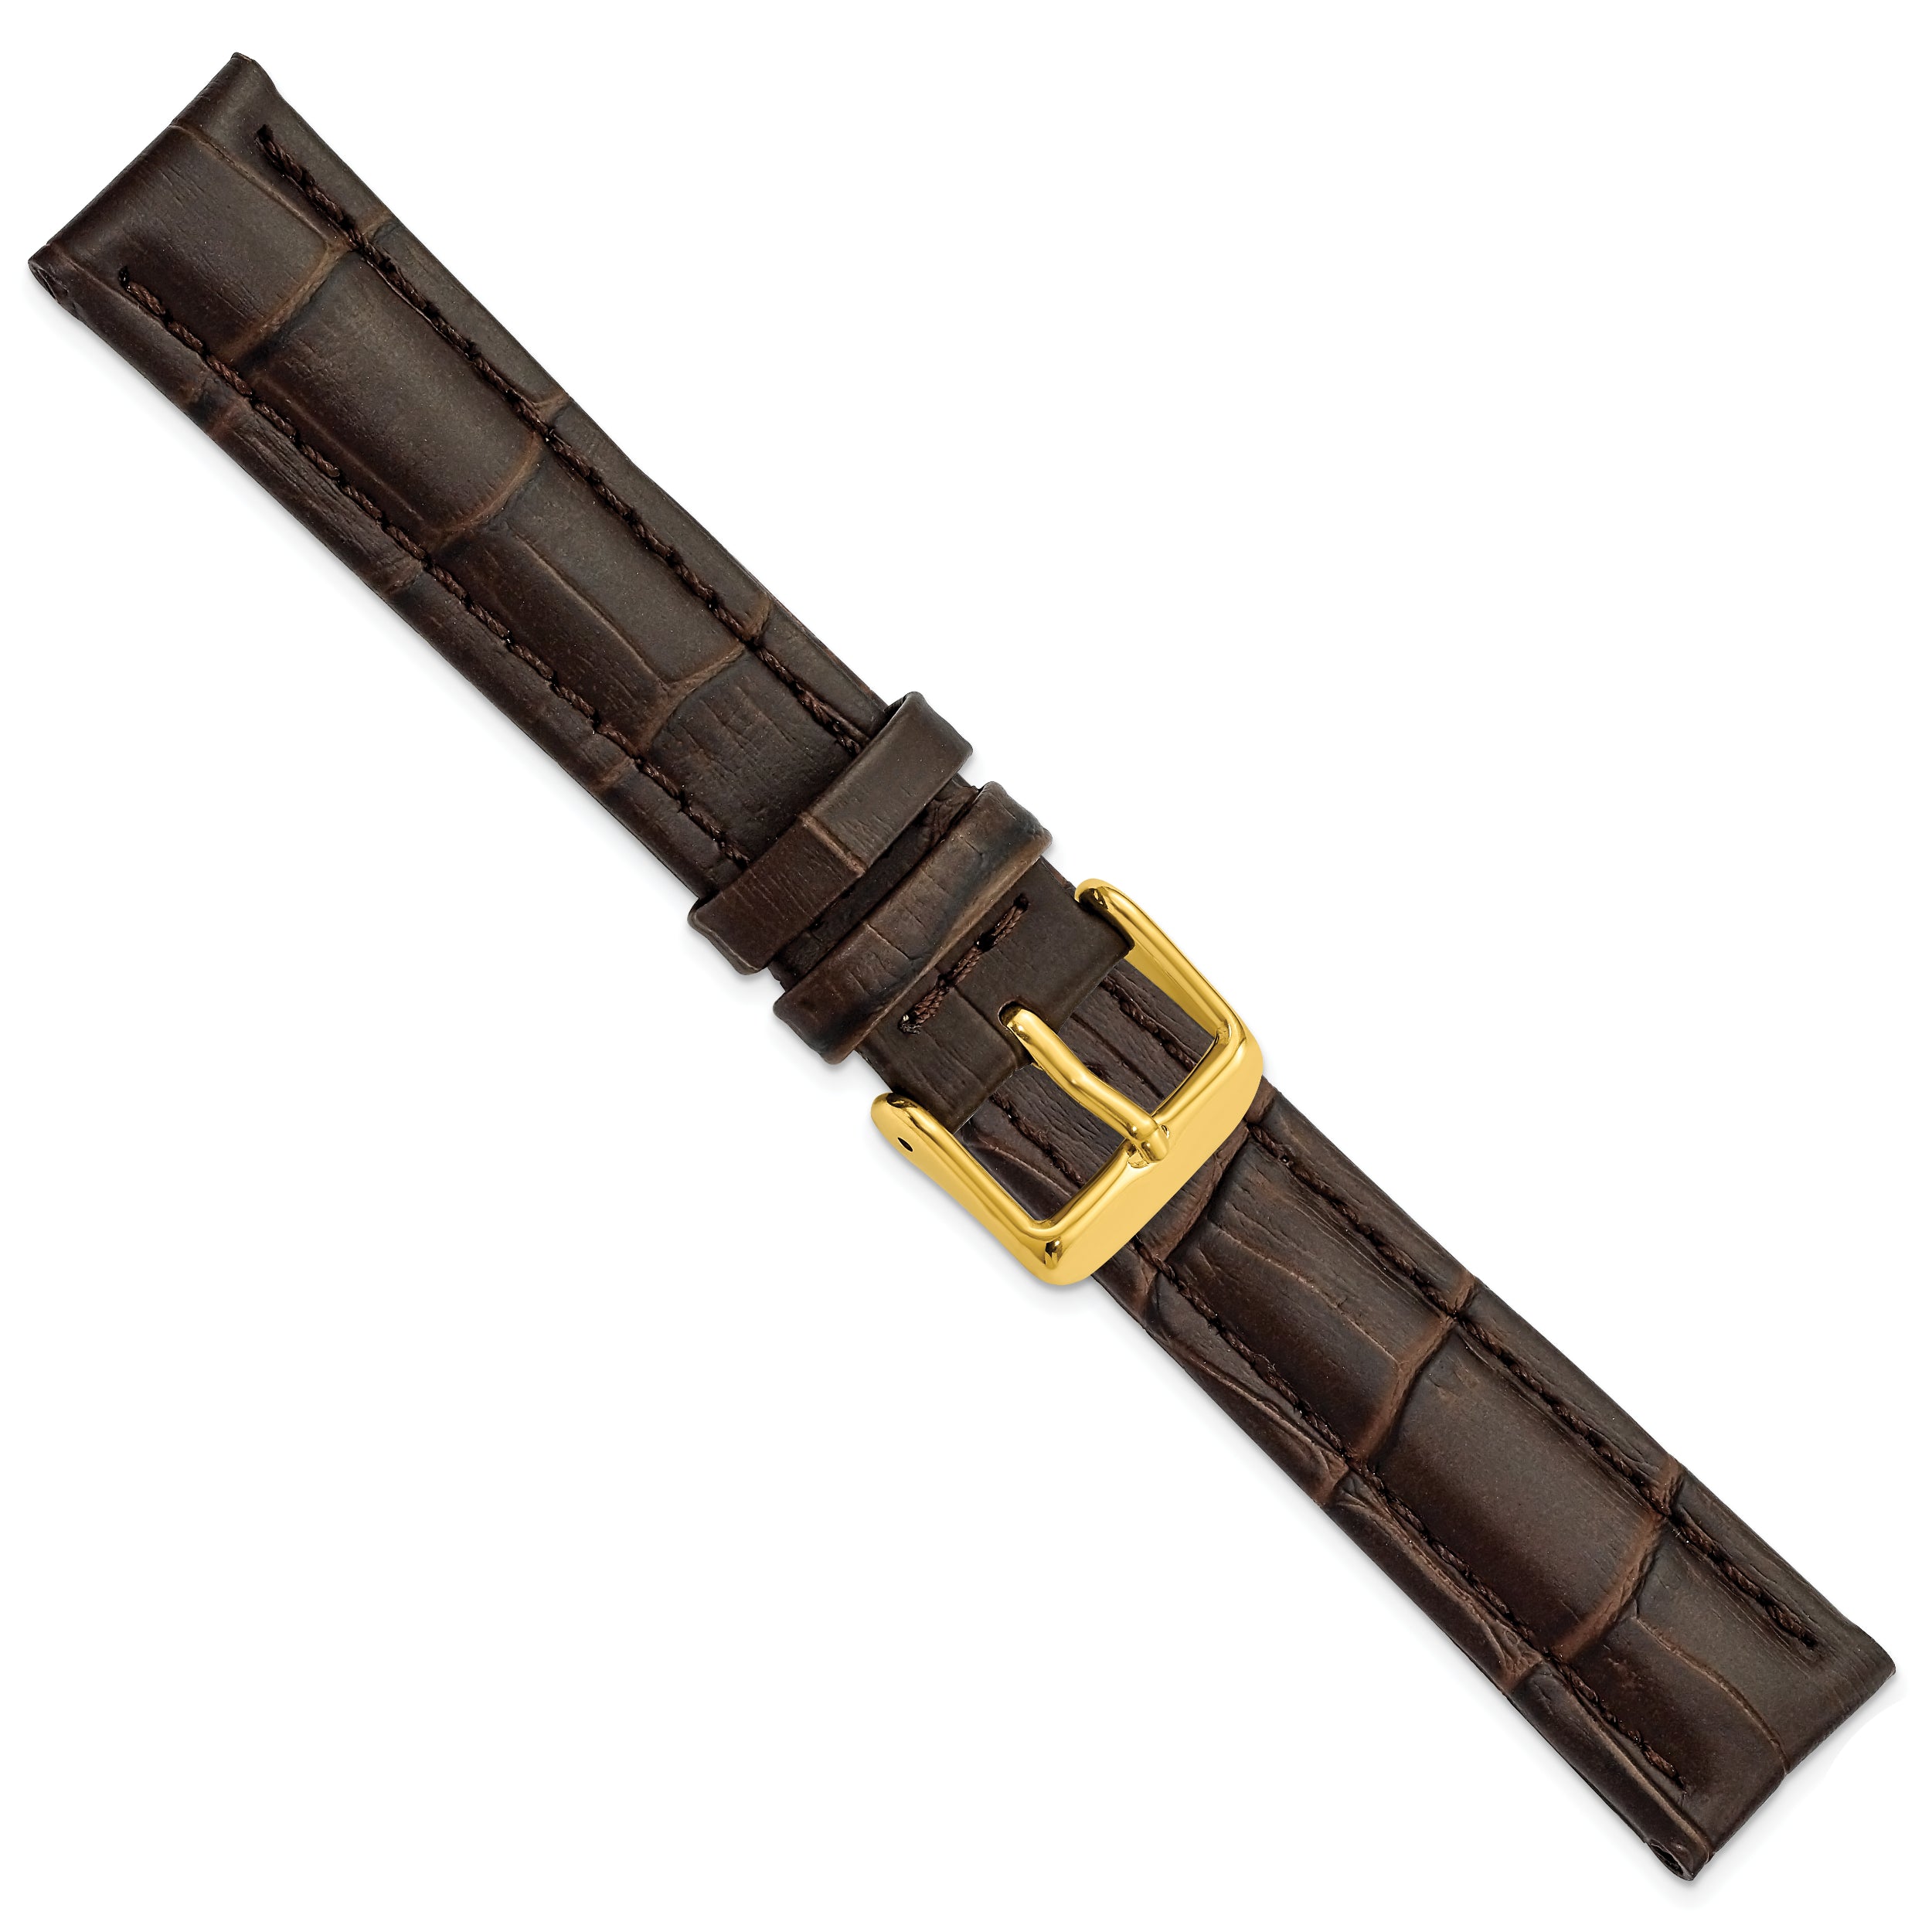 14mm Dark Brown Matte Alligator Grain Leather with Gold-tone Buckle 6.75 inch Watch Band